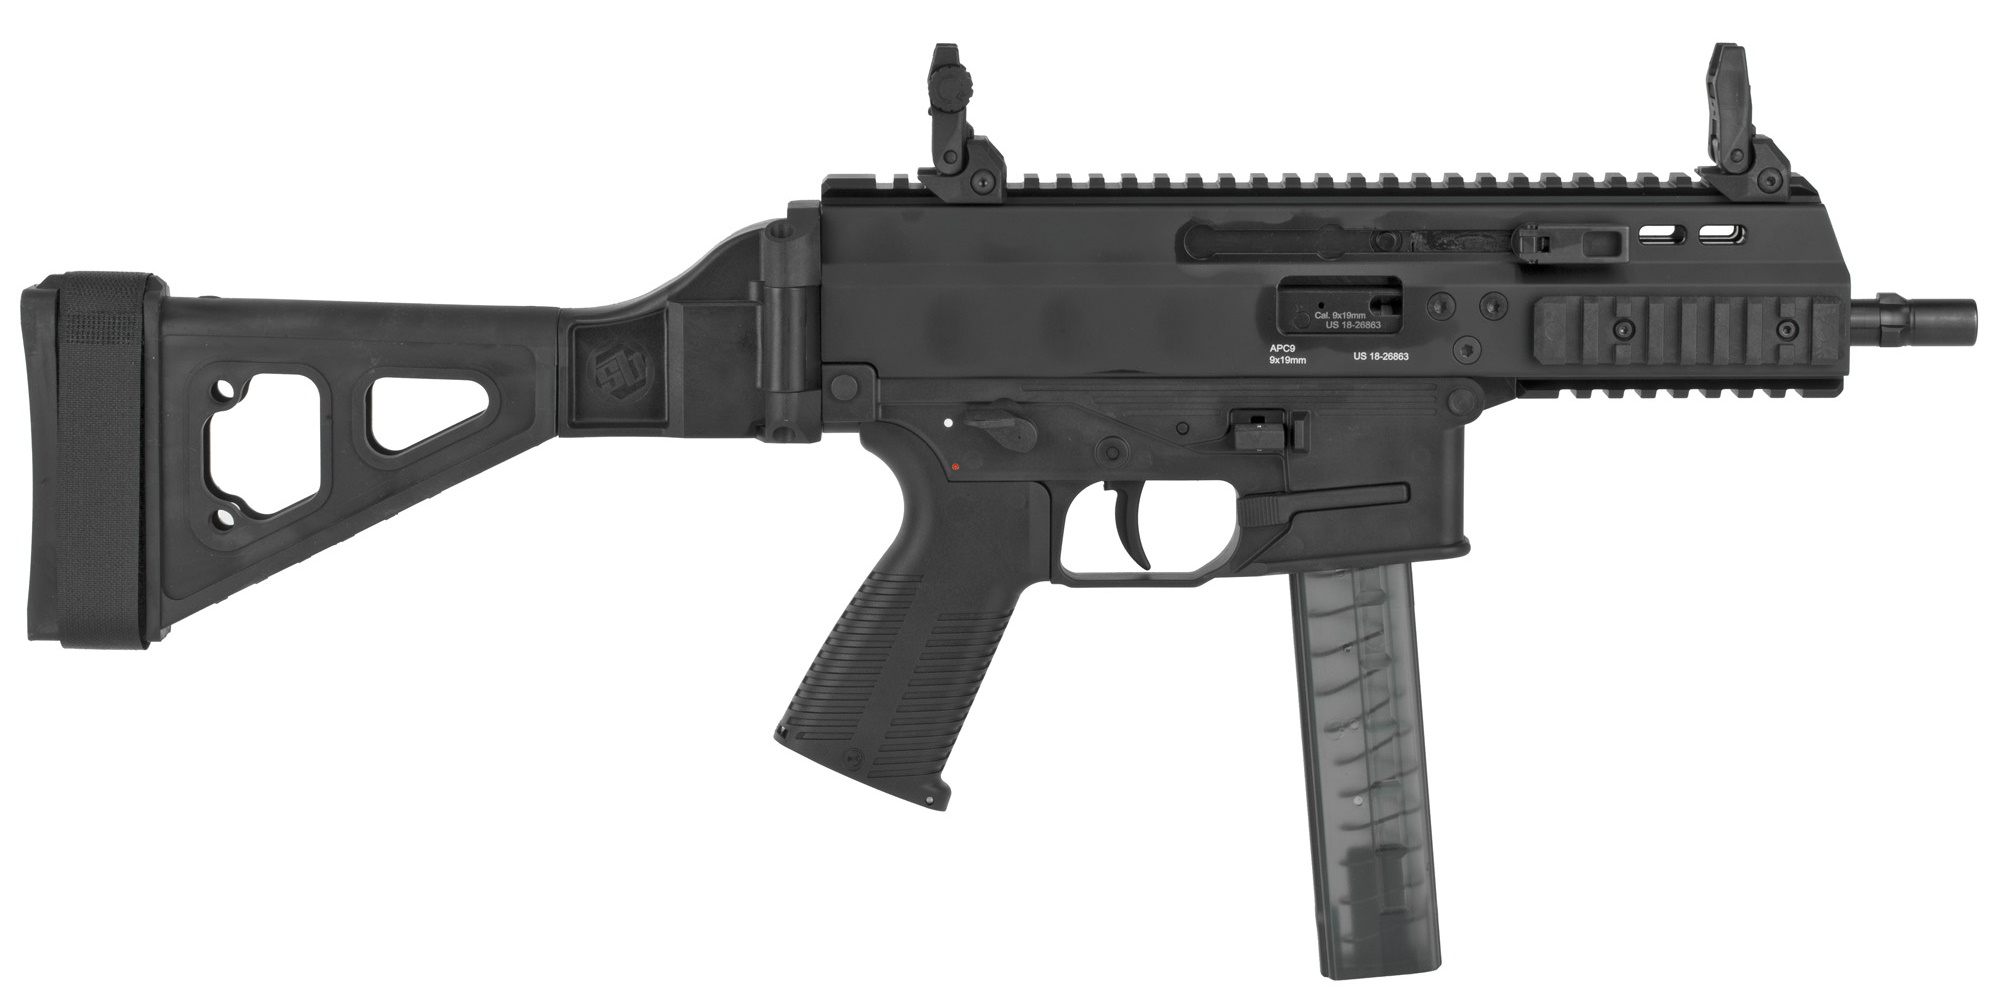 B T Apc9 Pro G 9mm Pistol W Brace Glock Magazines 7 0 Bt g Nagel S Gun Shop San Antonio Texas